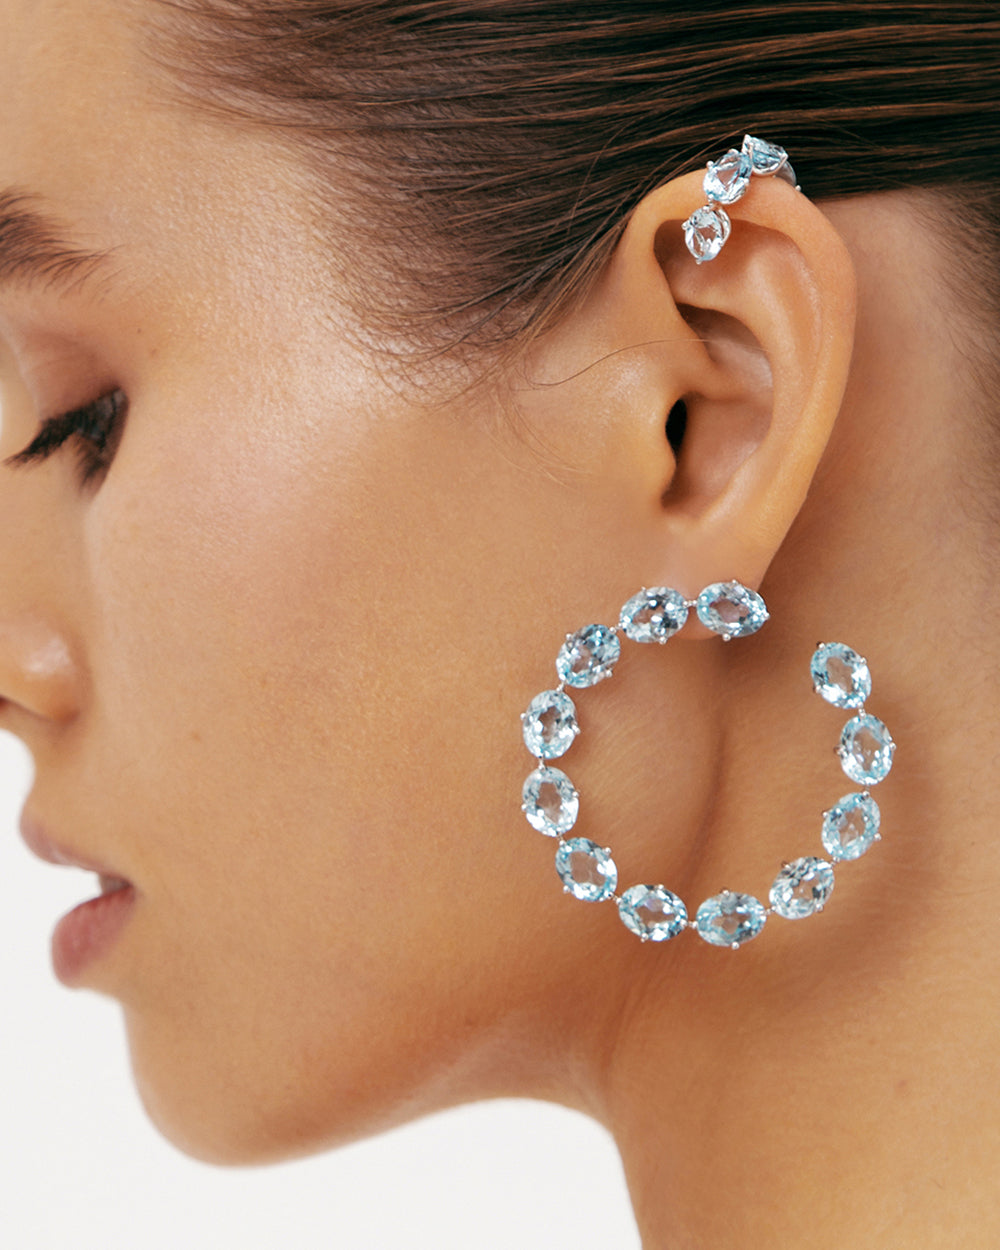 Earrings with sky blue topaz